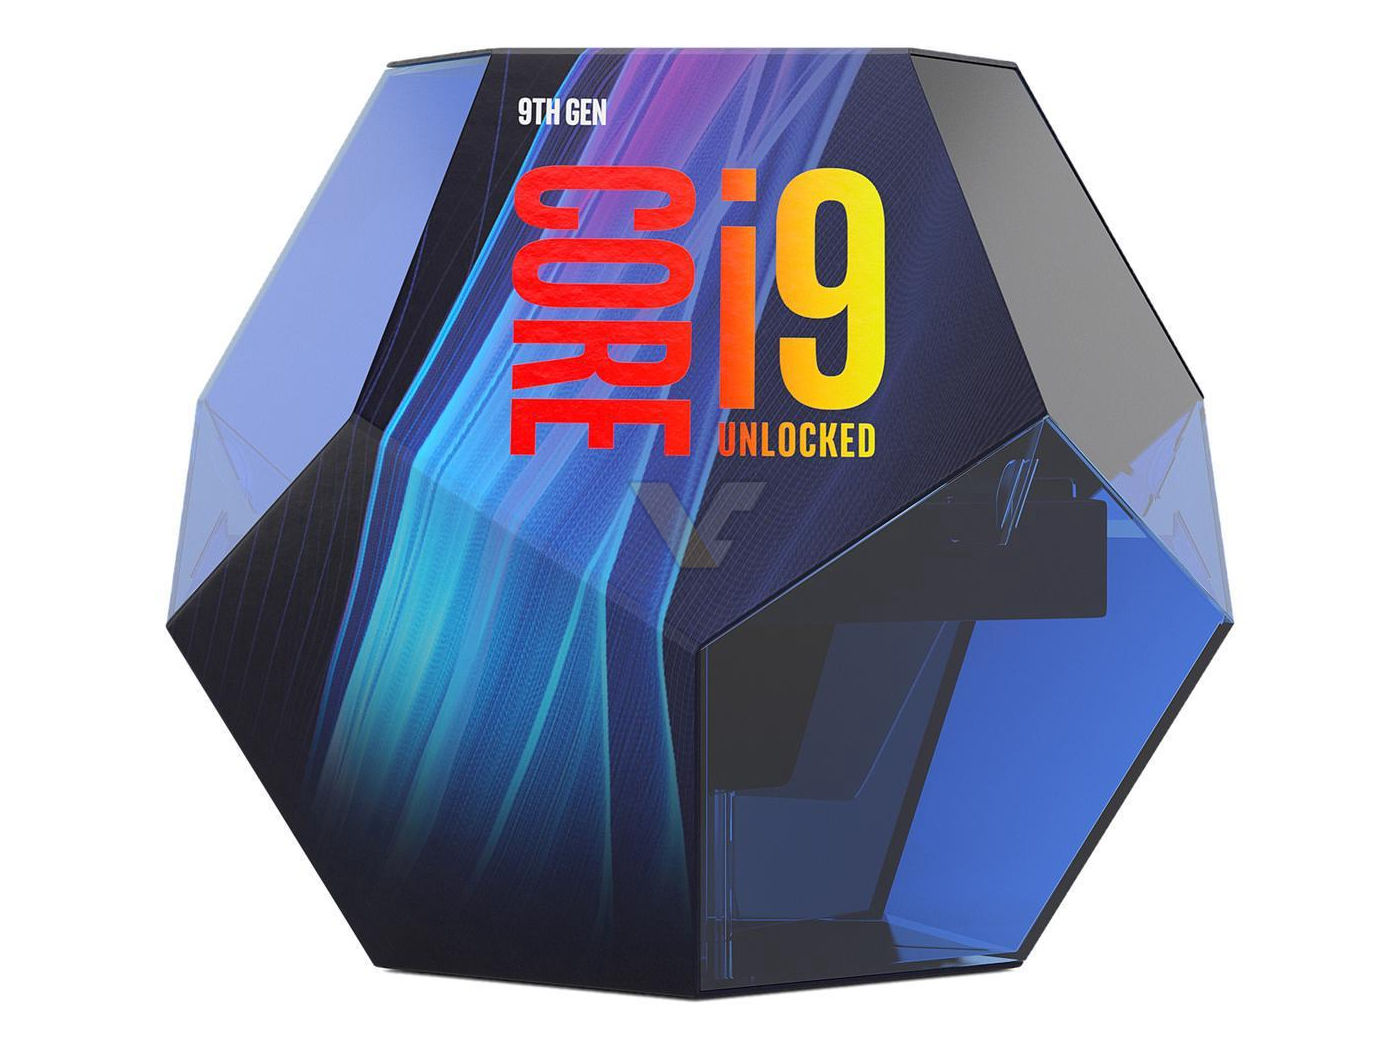 Core I9 9900K box